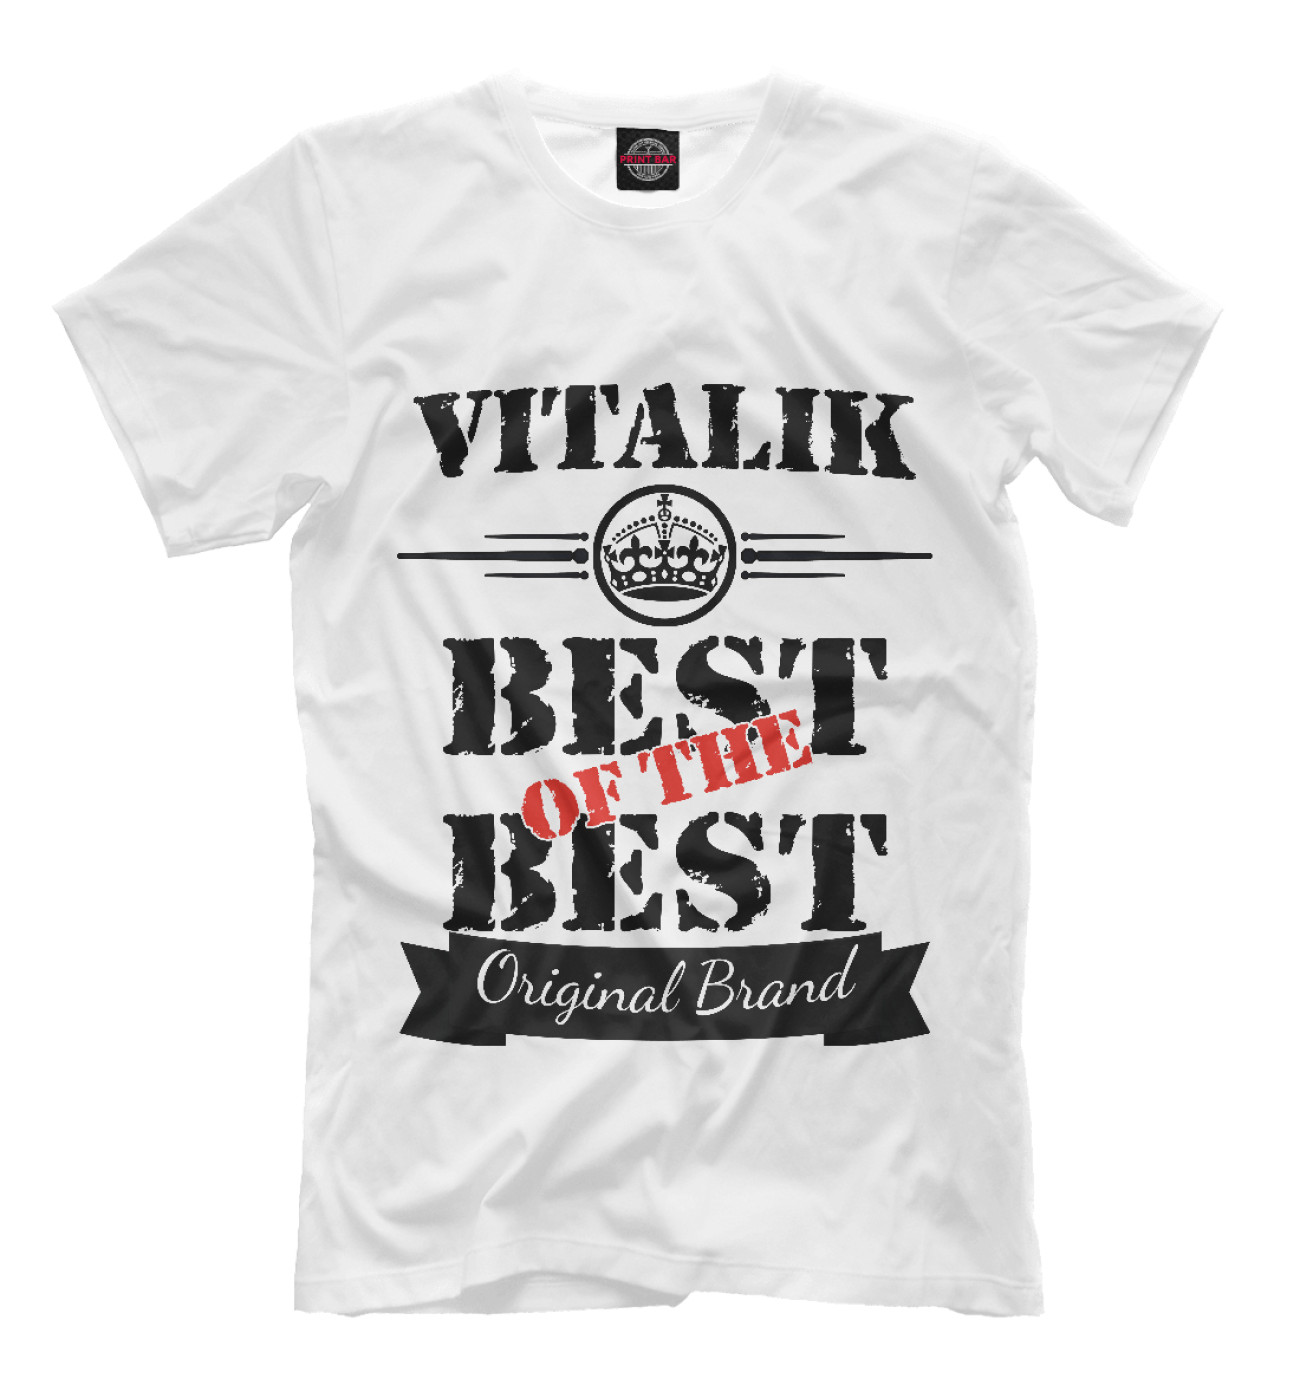 Мужская Футболка Виталик Best of the best (og brand), артикул: VTL-863318-fut-2